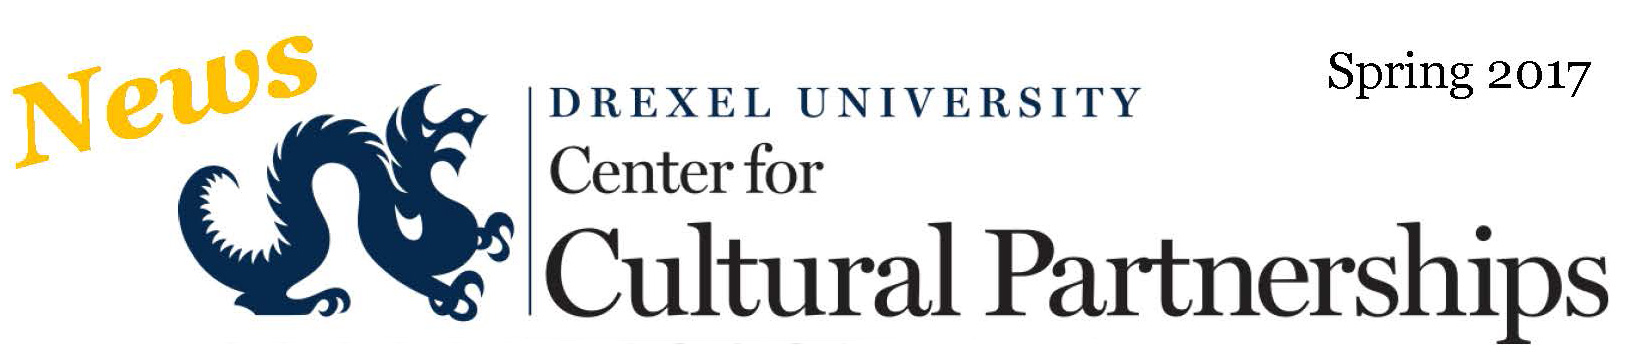 center for cultural partnerships